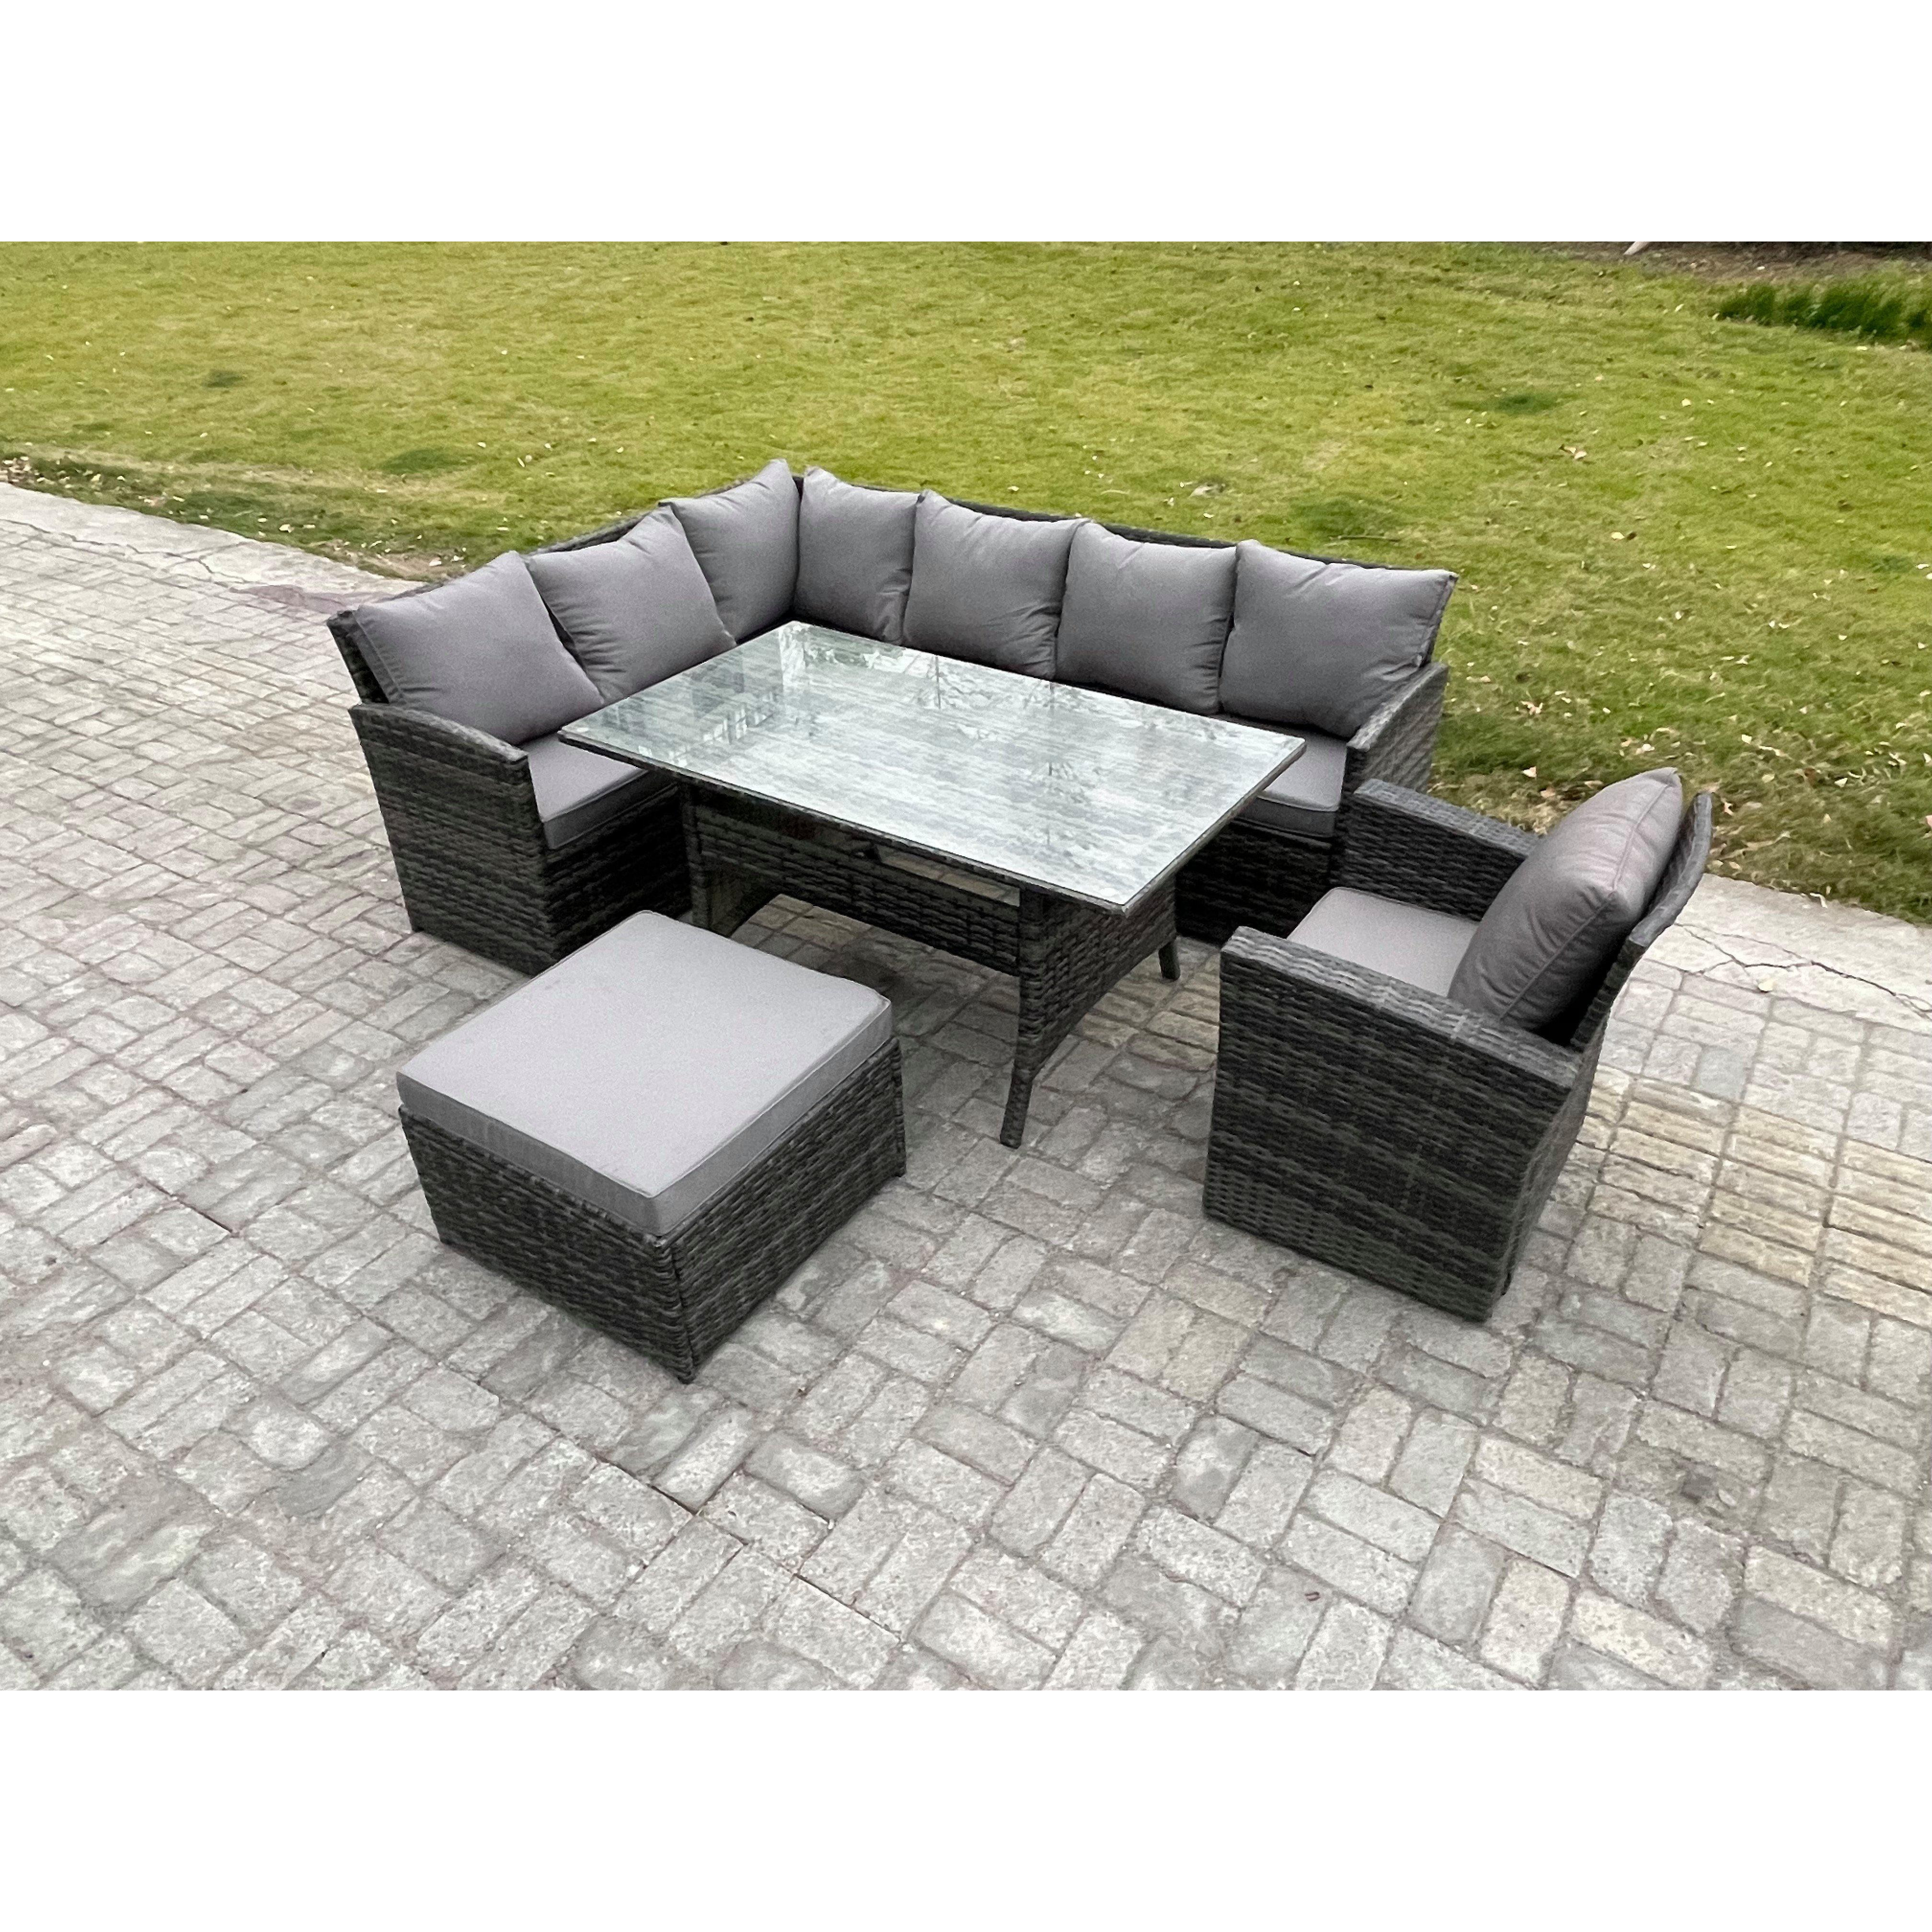 8 Seater Outdoor Rattan Garden Furniture Set with Rectangular Dining Table Big Footstool Armchair Patio Corner Sofa Set - image 1